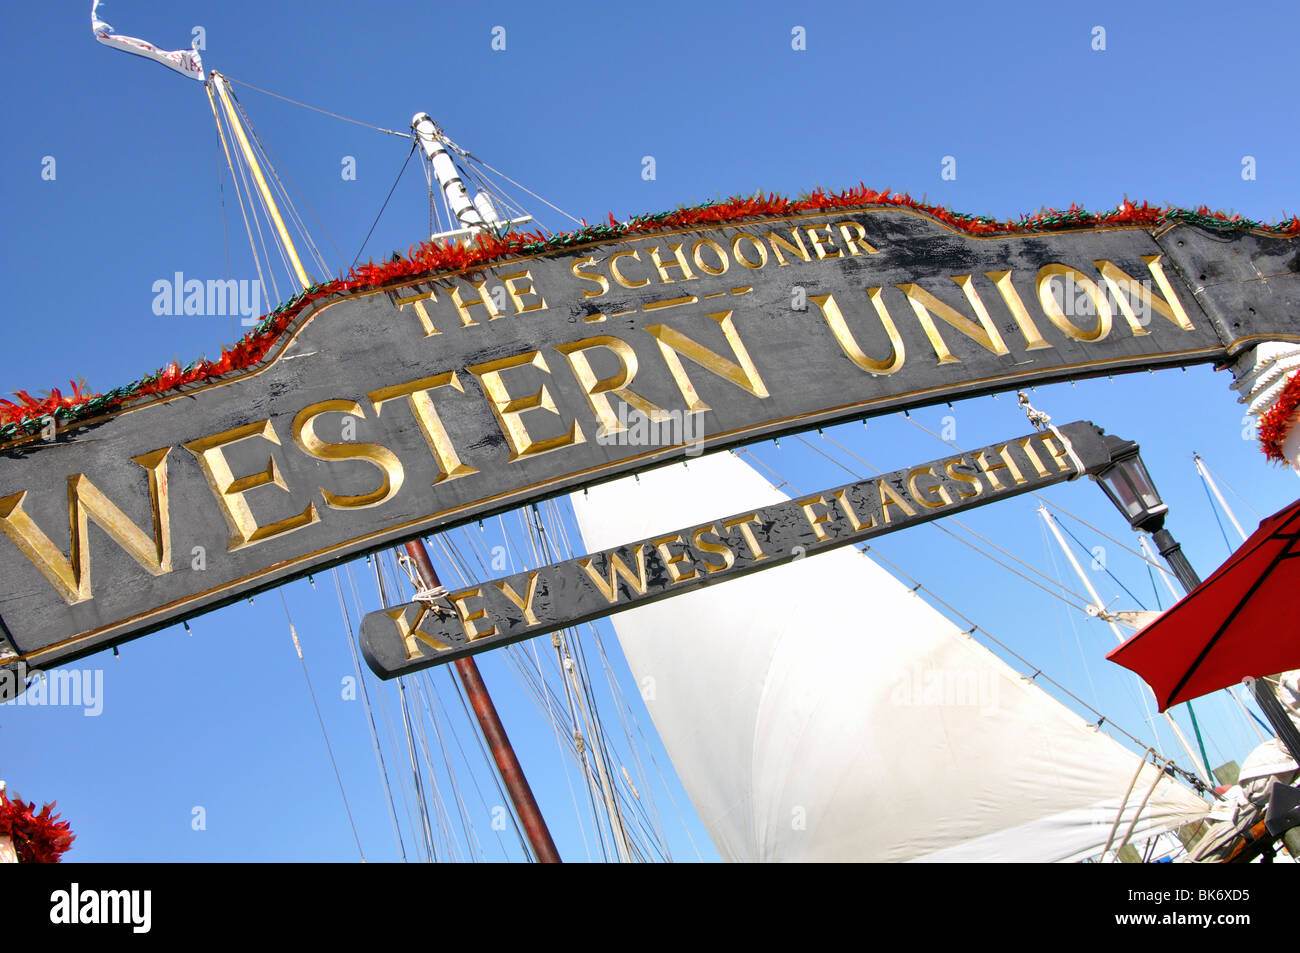 Tall Ship Western Union